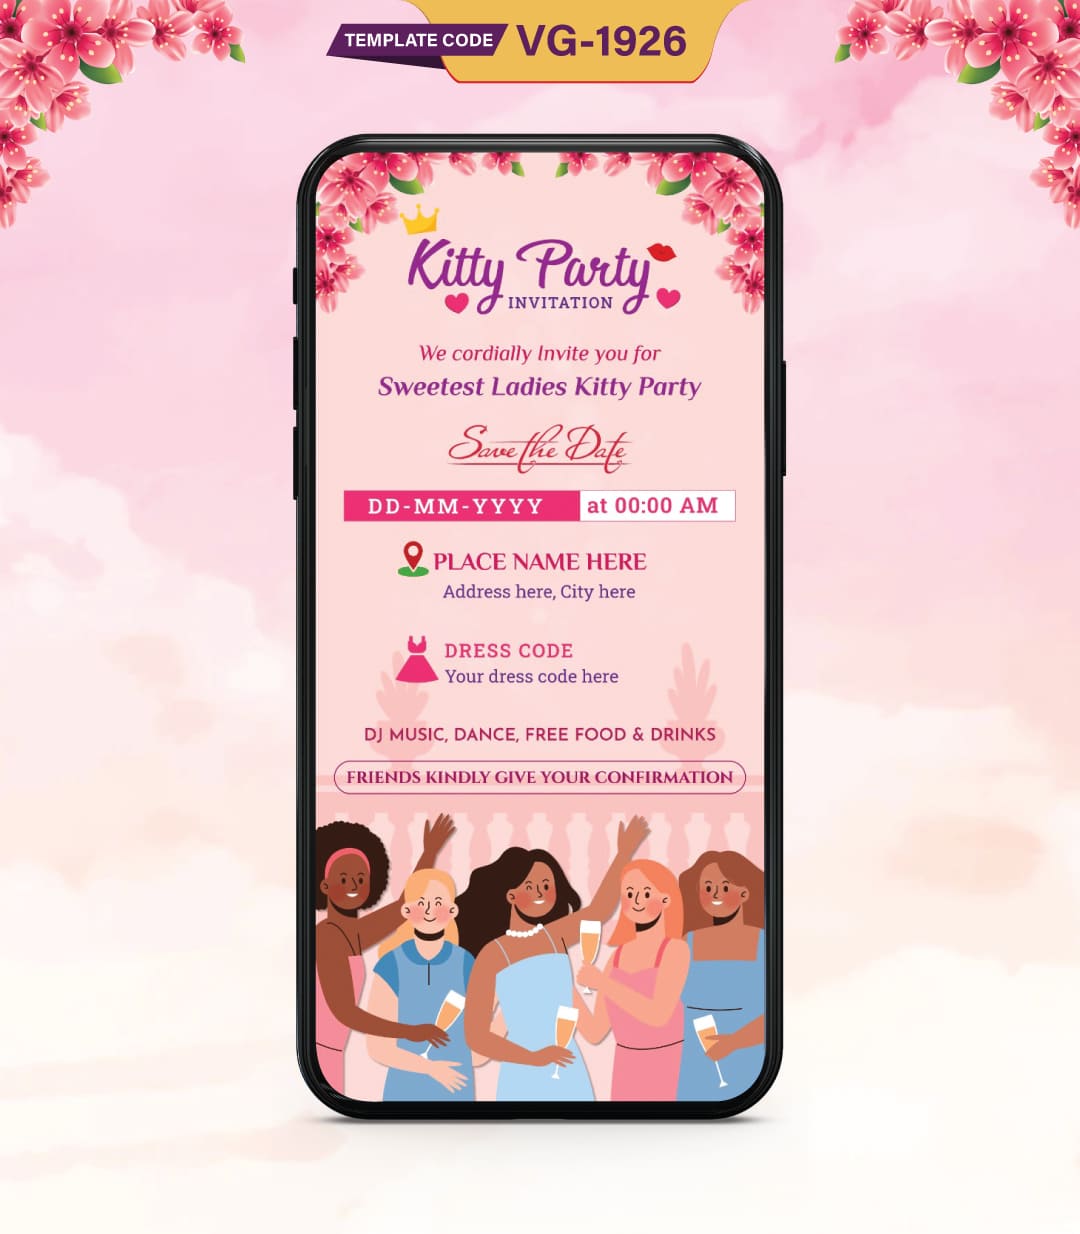 Ladies Kitty Party Invitation